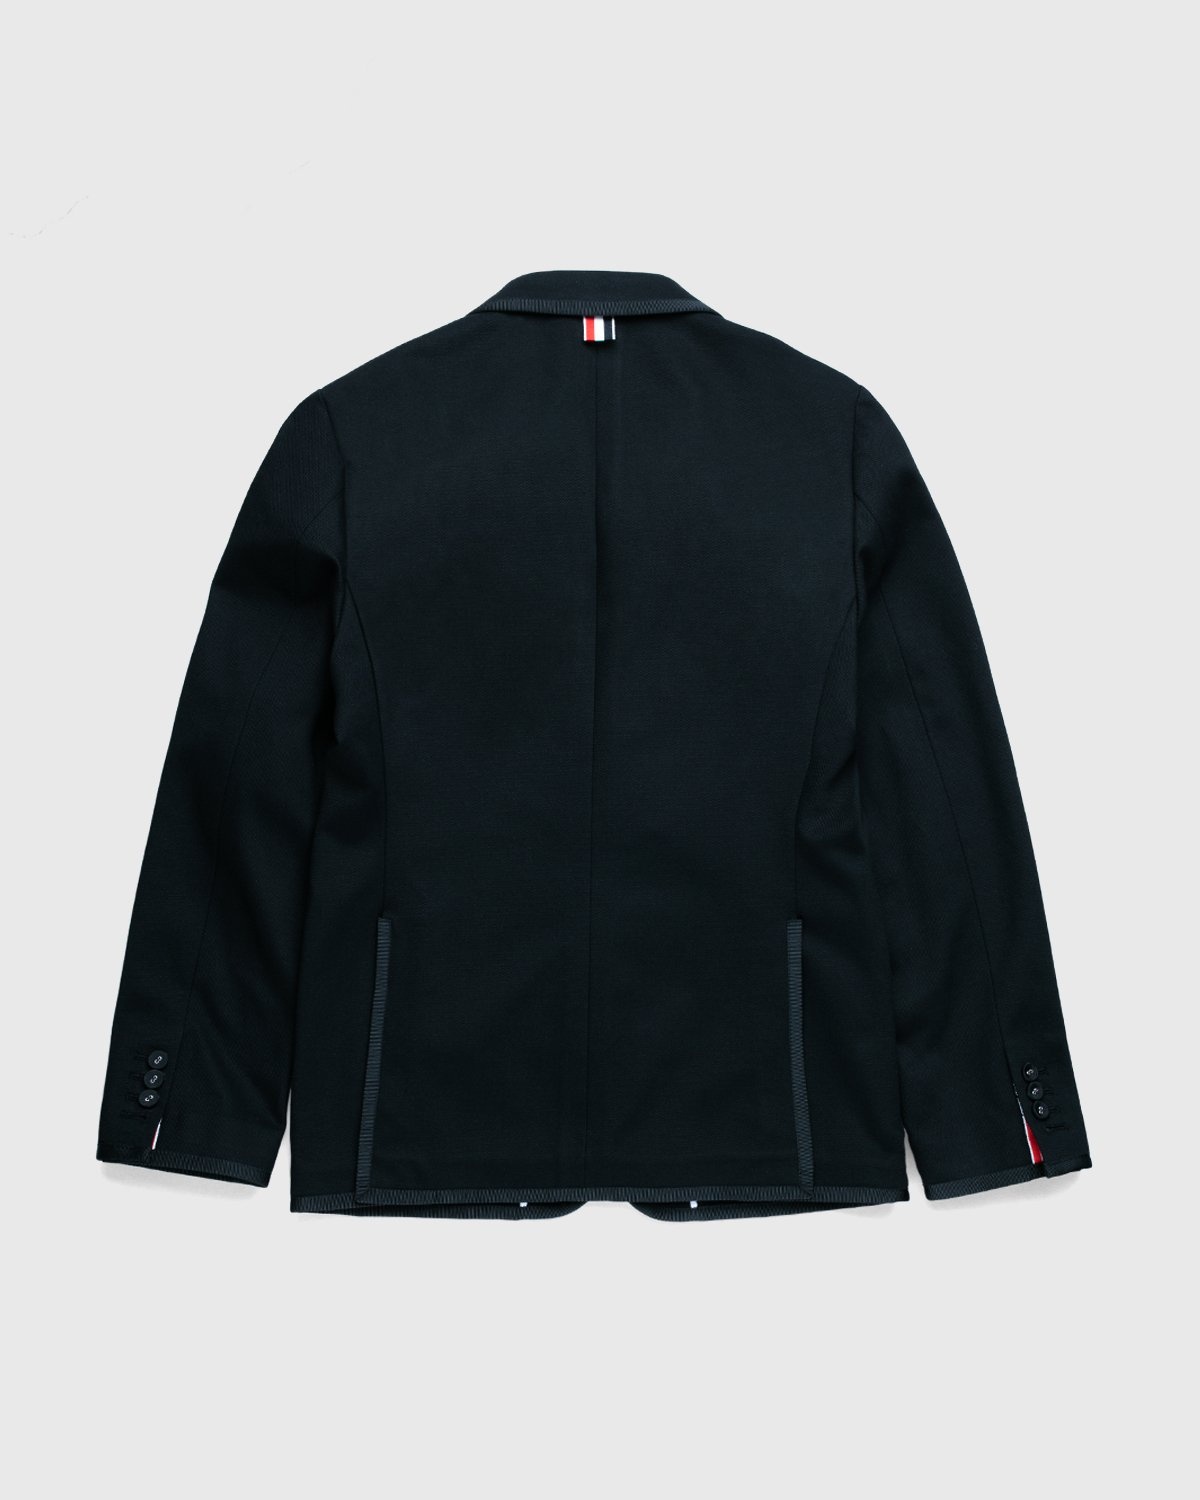 Thom Browne x Highsnobiety – Women’s Deconstructed Sport Jacket Black - Blazers - Black - Image 2